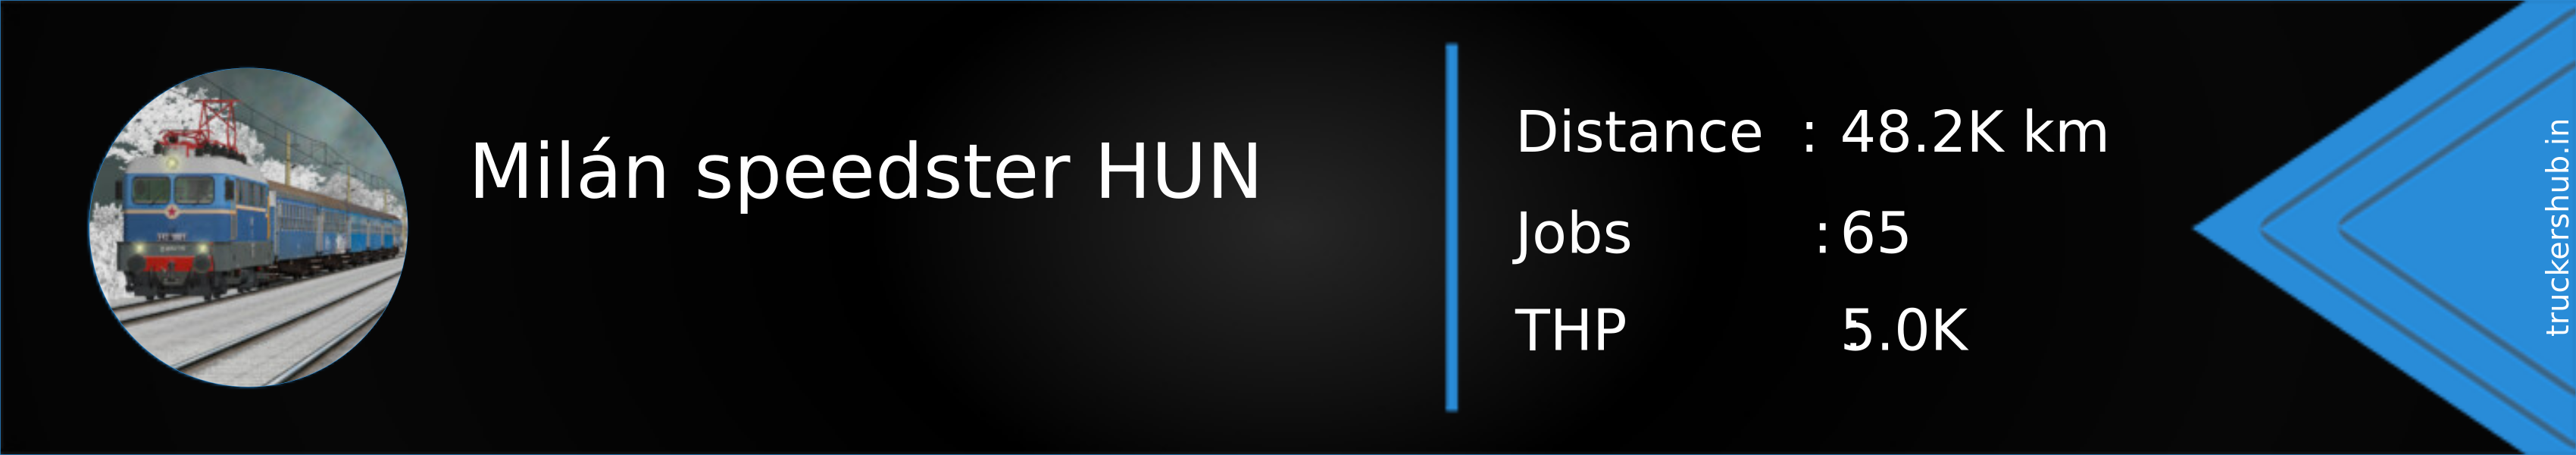 Milán speedster HUN Banner